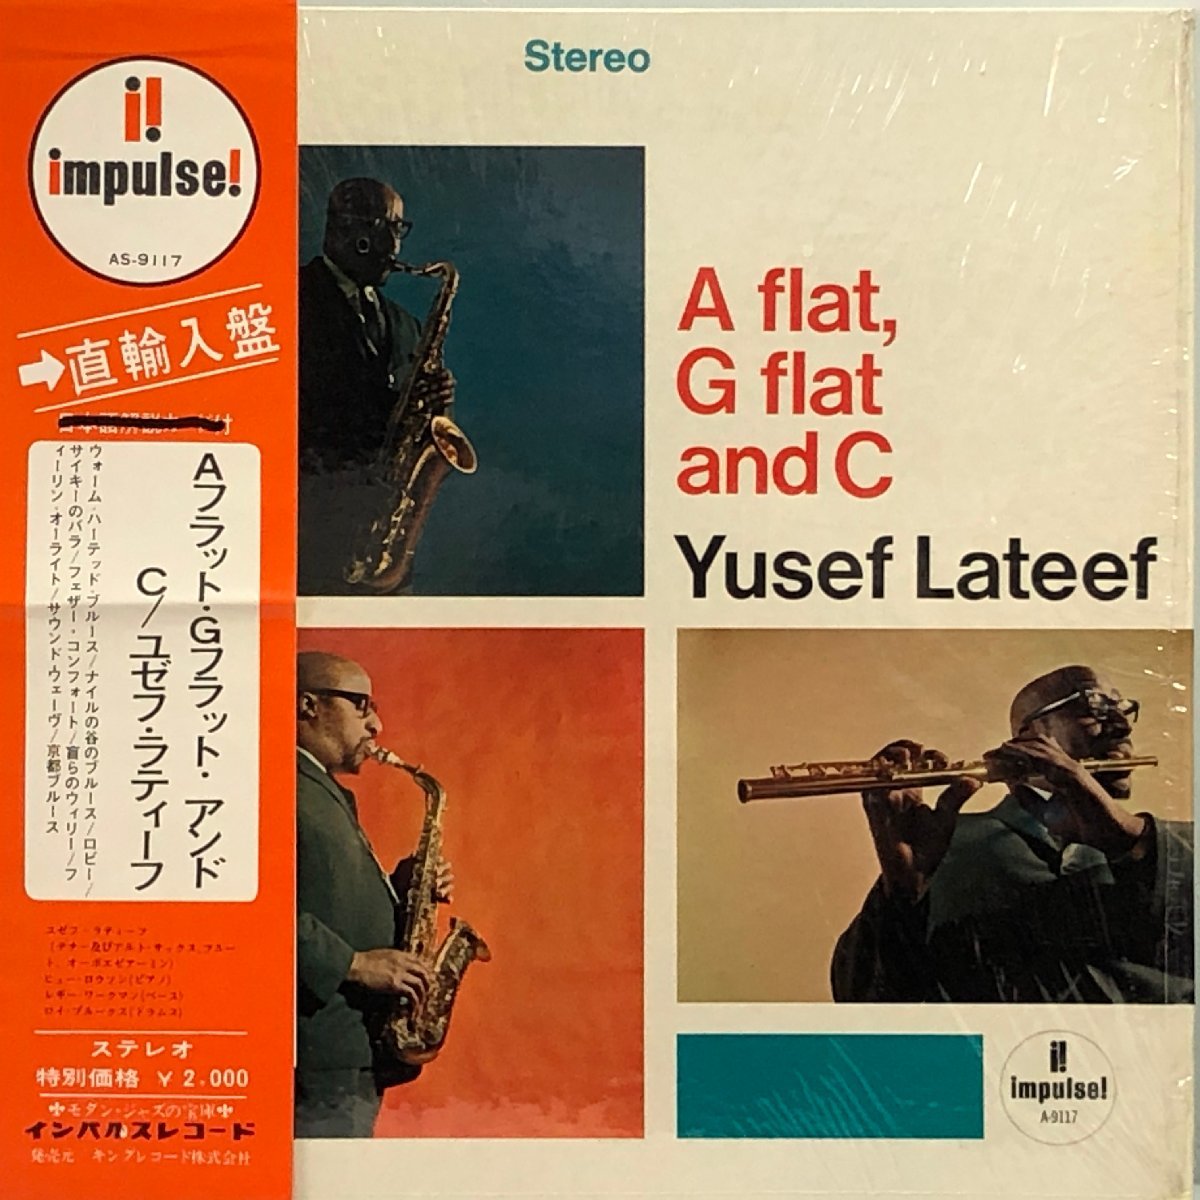 【US盤 LP】YUSEF LATEEF / A FLAT, G FLAT AND C / IMPULSE AS-9117